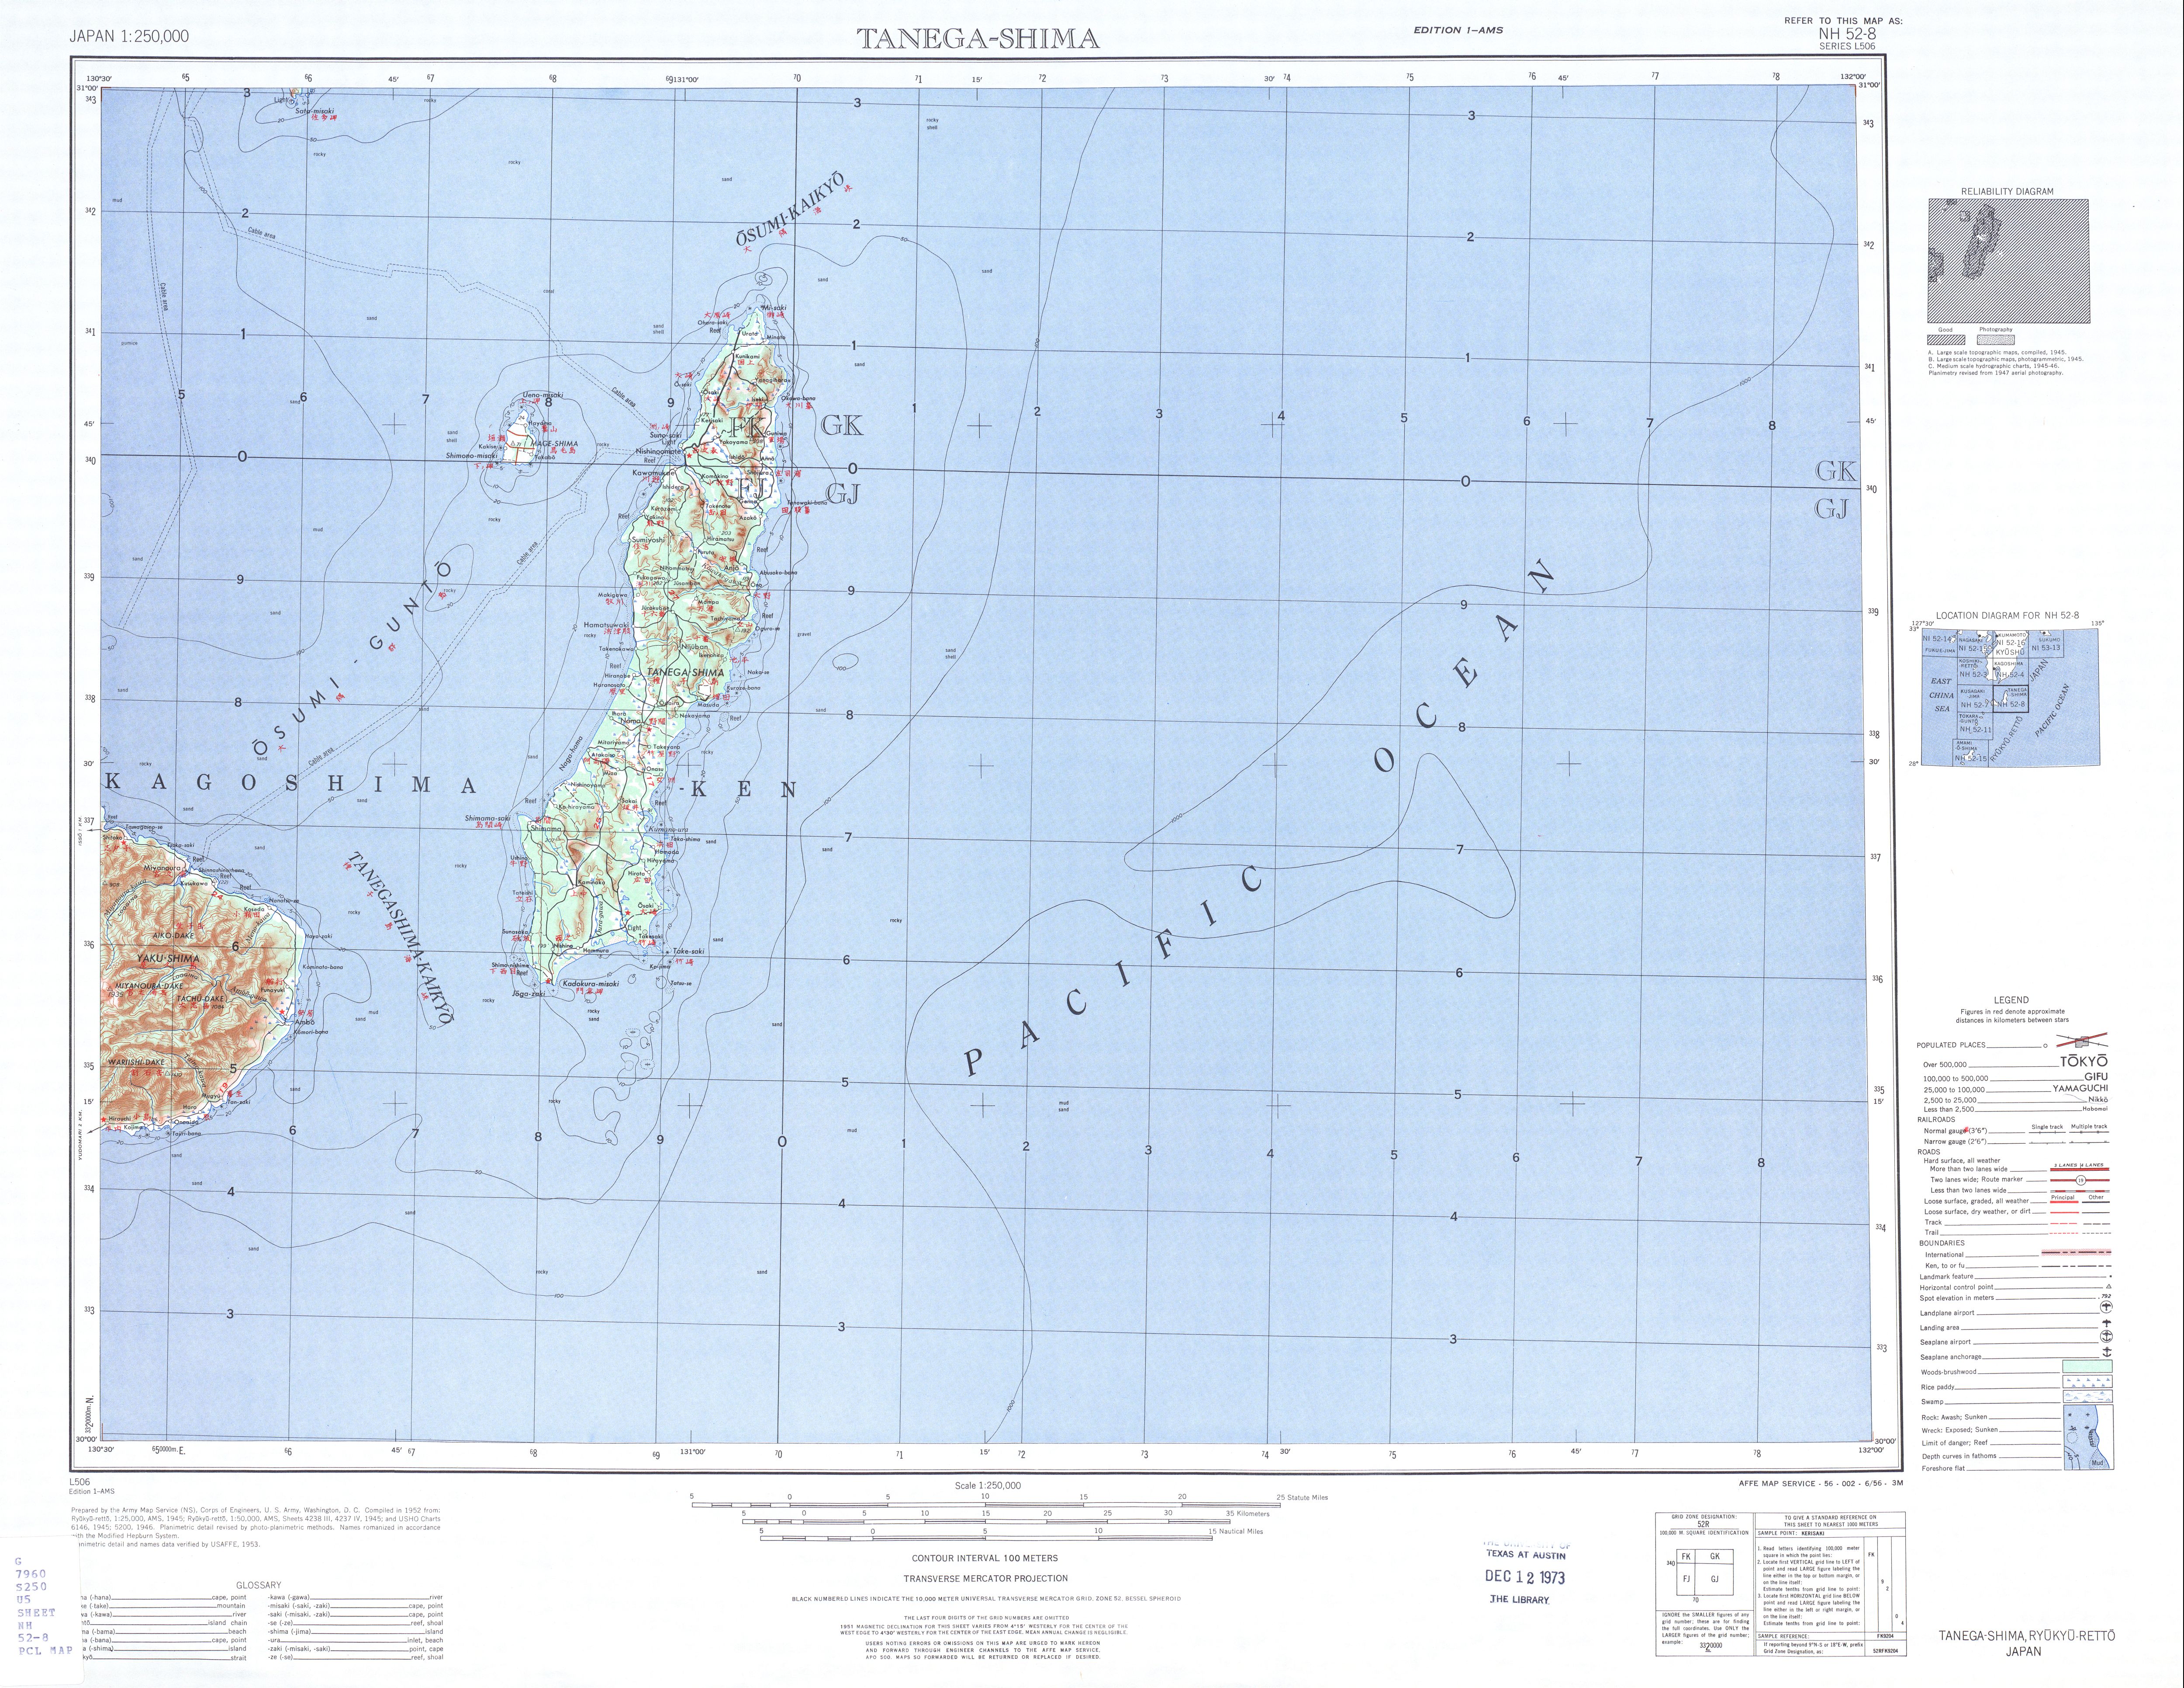 Hoja Tanega-Shima del Mapa Topográfico de Japón 1954